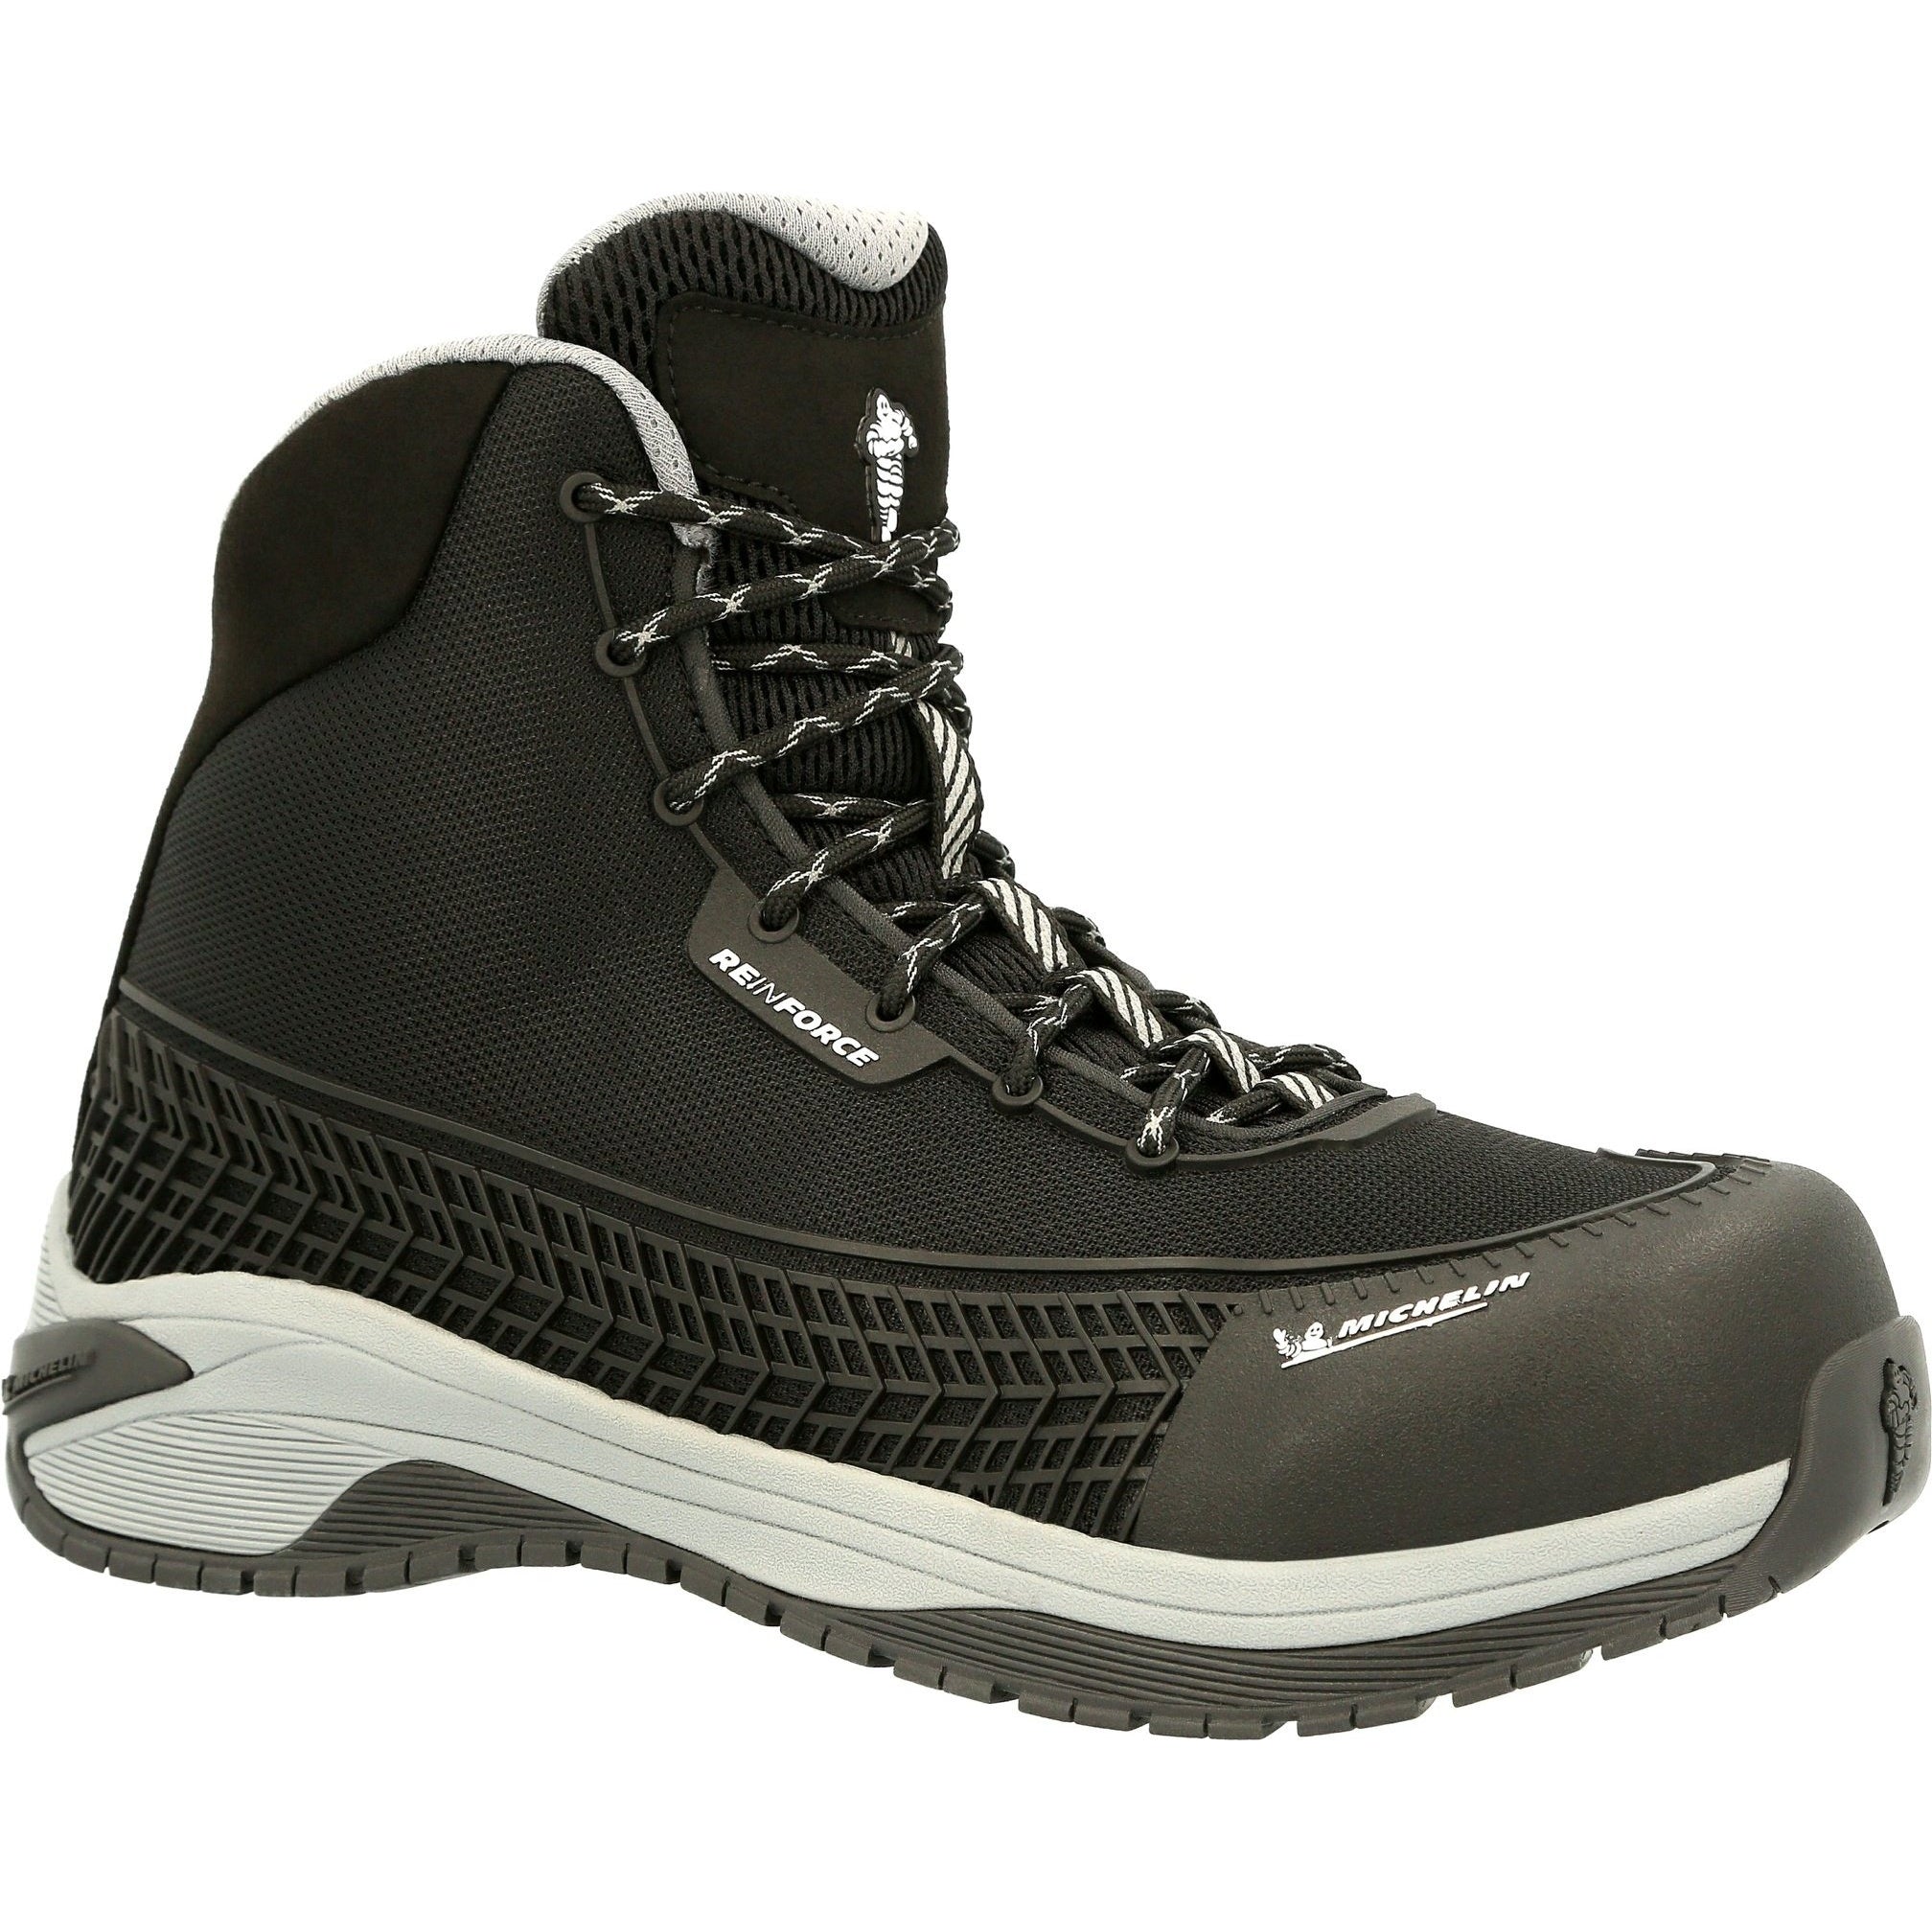 Michelin Men's Latitude Tour 5" Alloy Toe Athletic Work Shoe Black MIC0004 8 / Medium / Black - Overlook Boots